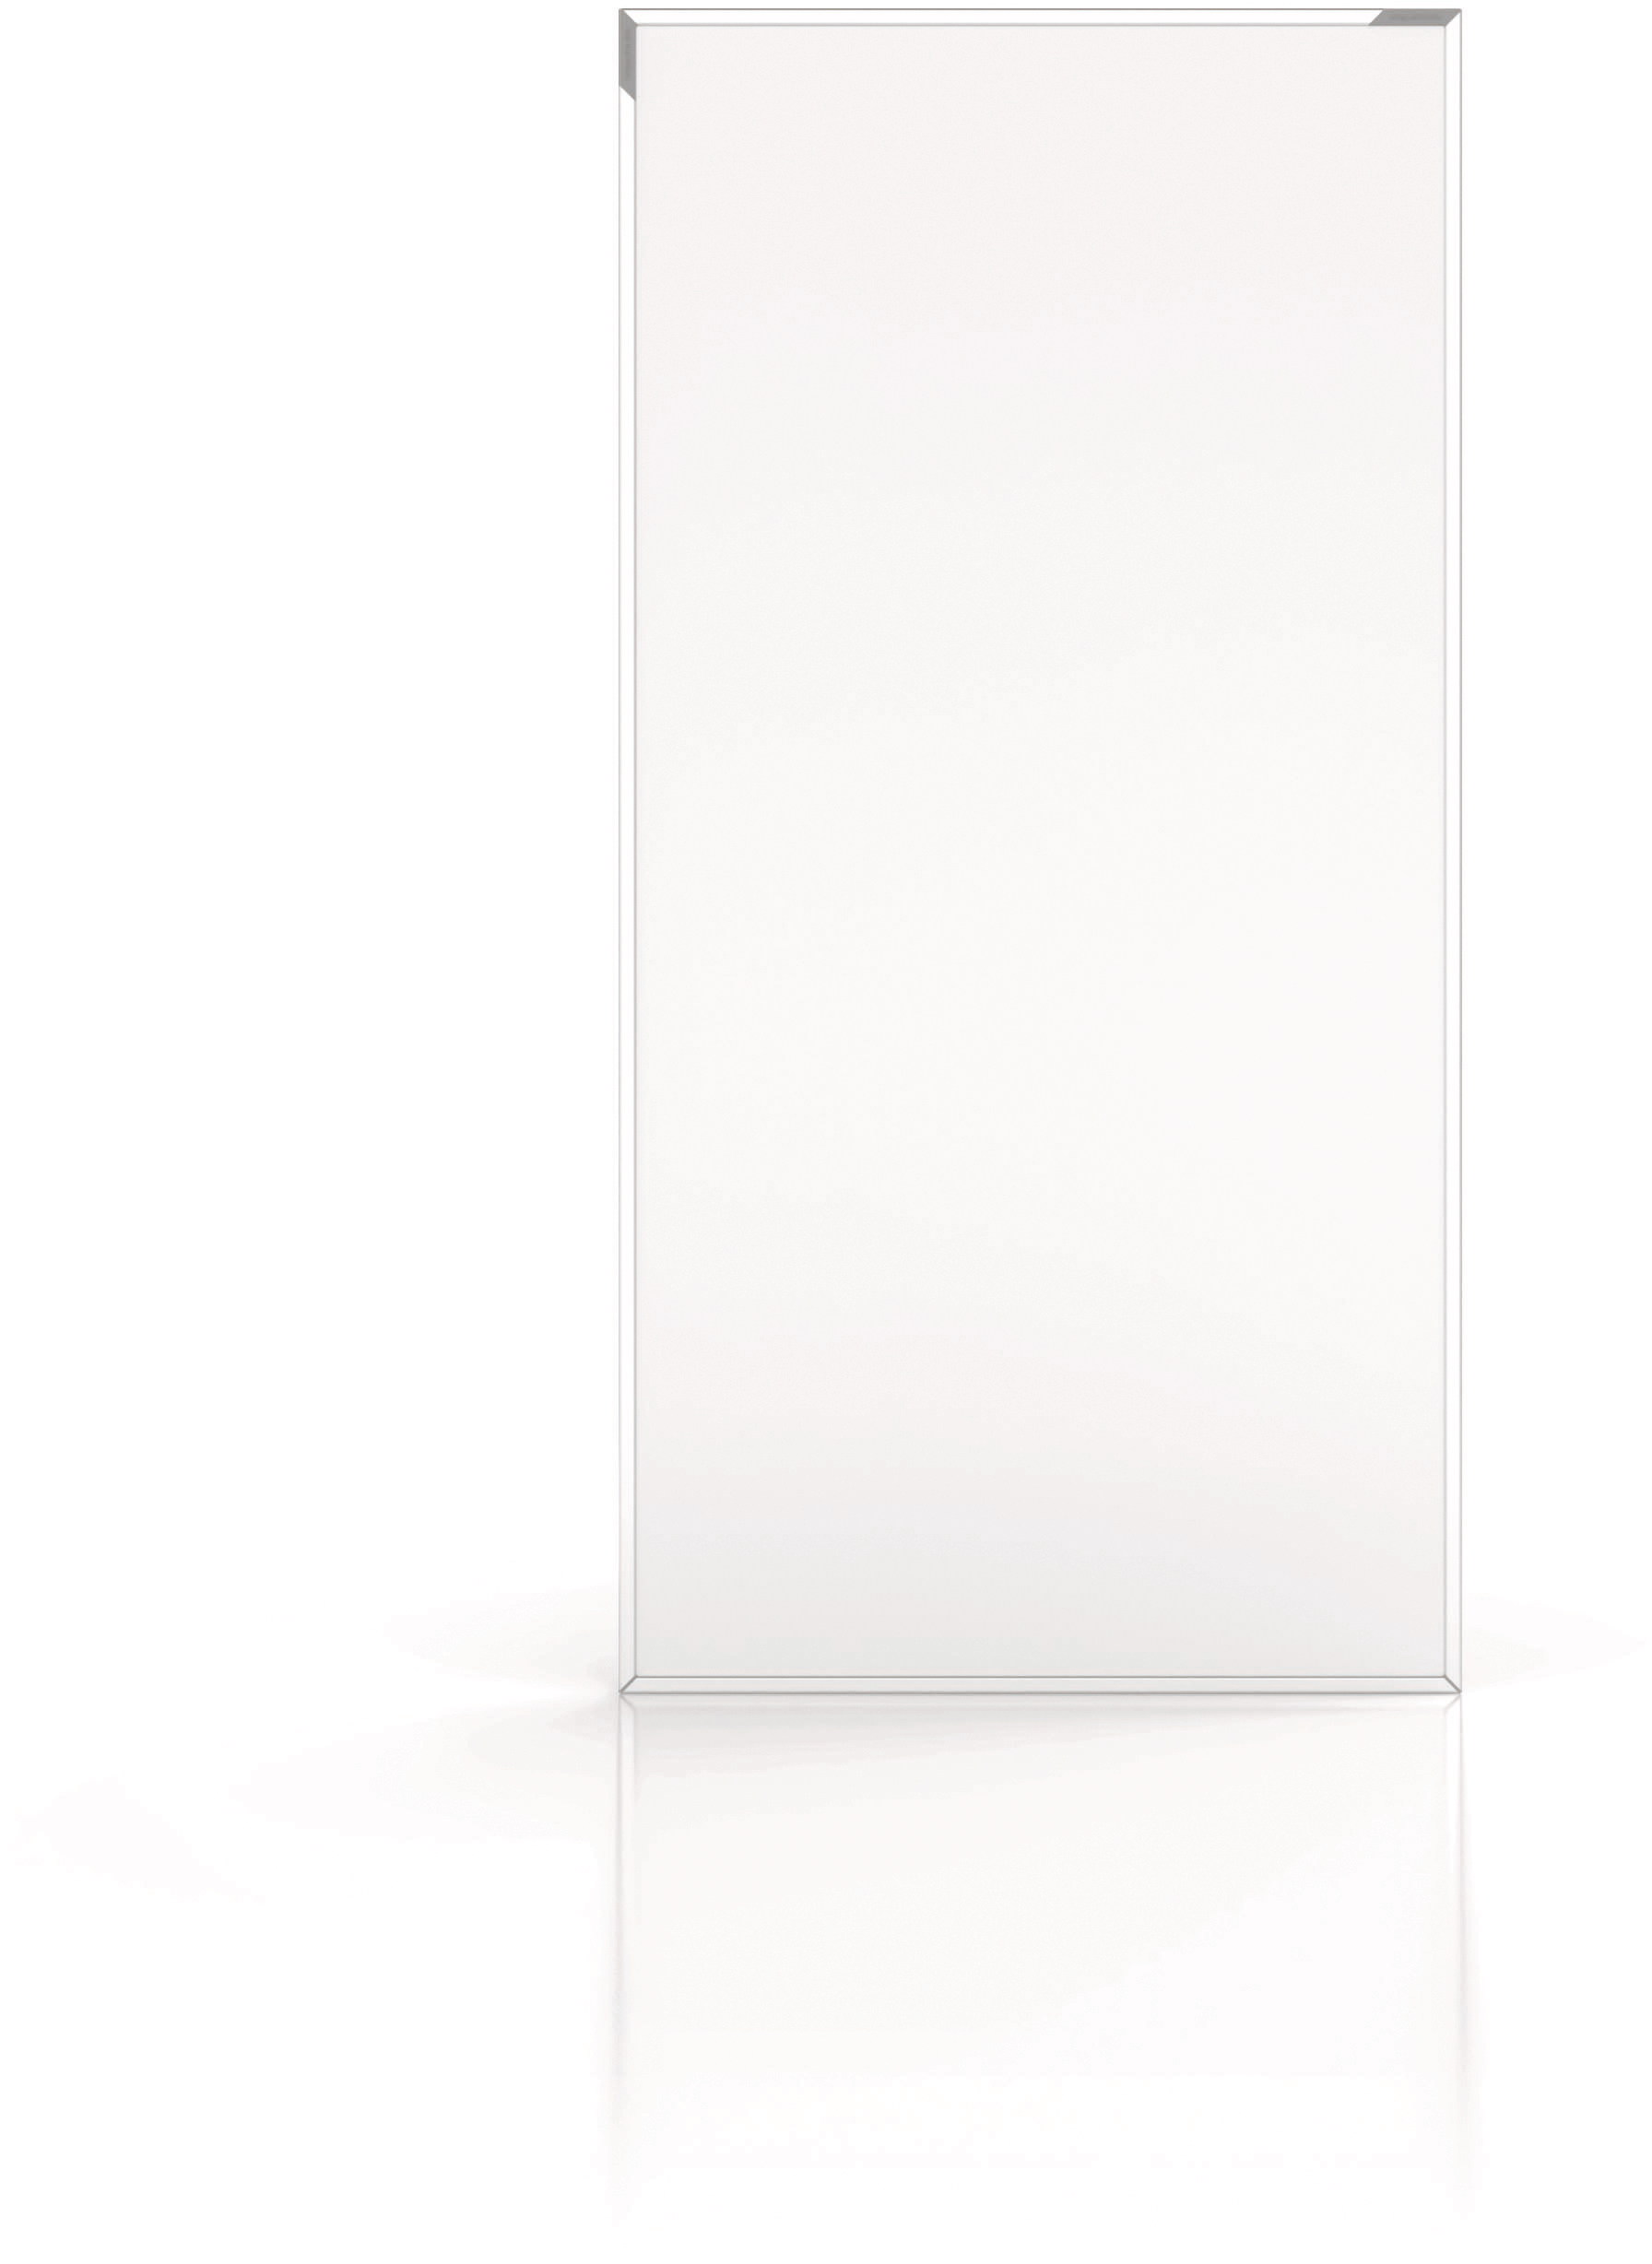 MAGNETOPLAN Design-Thinking Whiteboard 1241292 double émailler 178x90cm